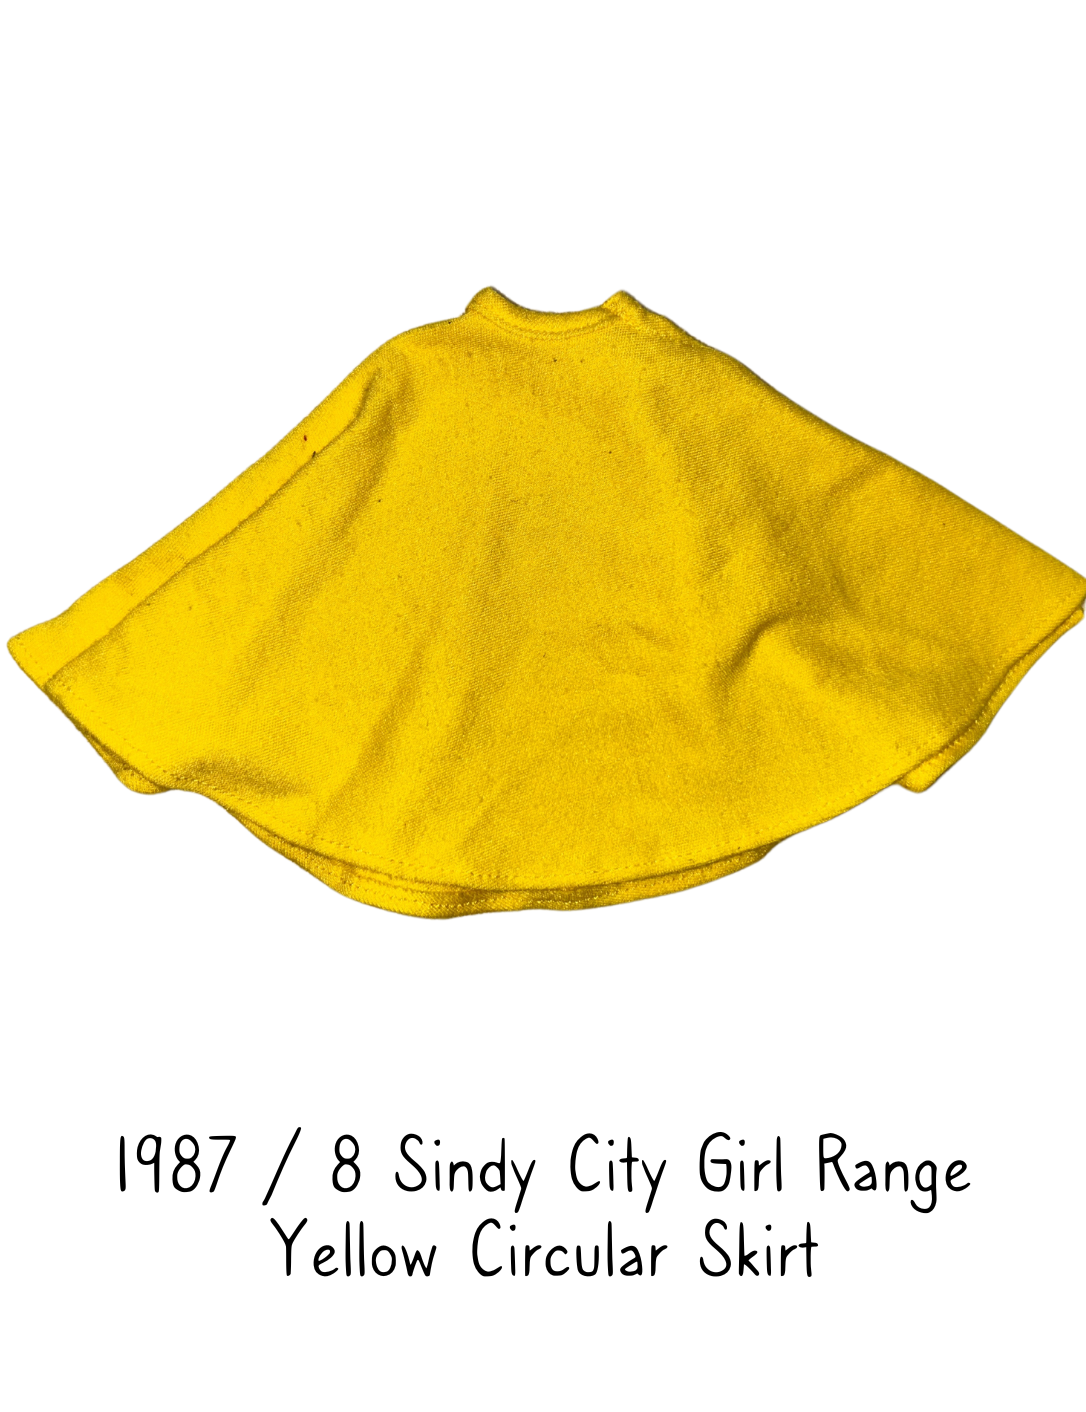 1987 Hasbro Sindy City Girl Yellow Circular Skirt